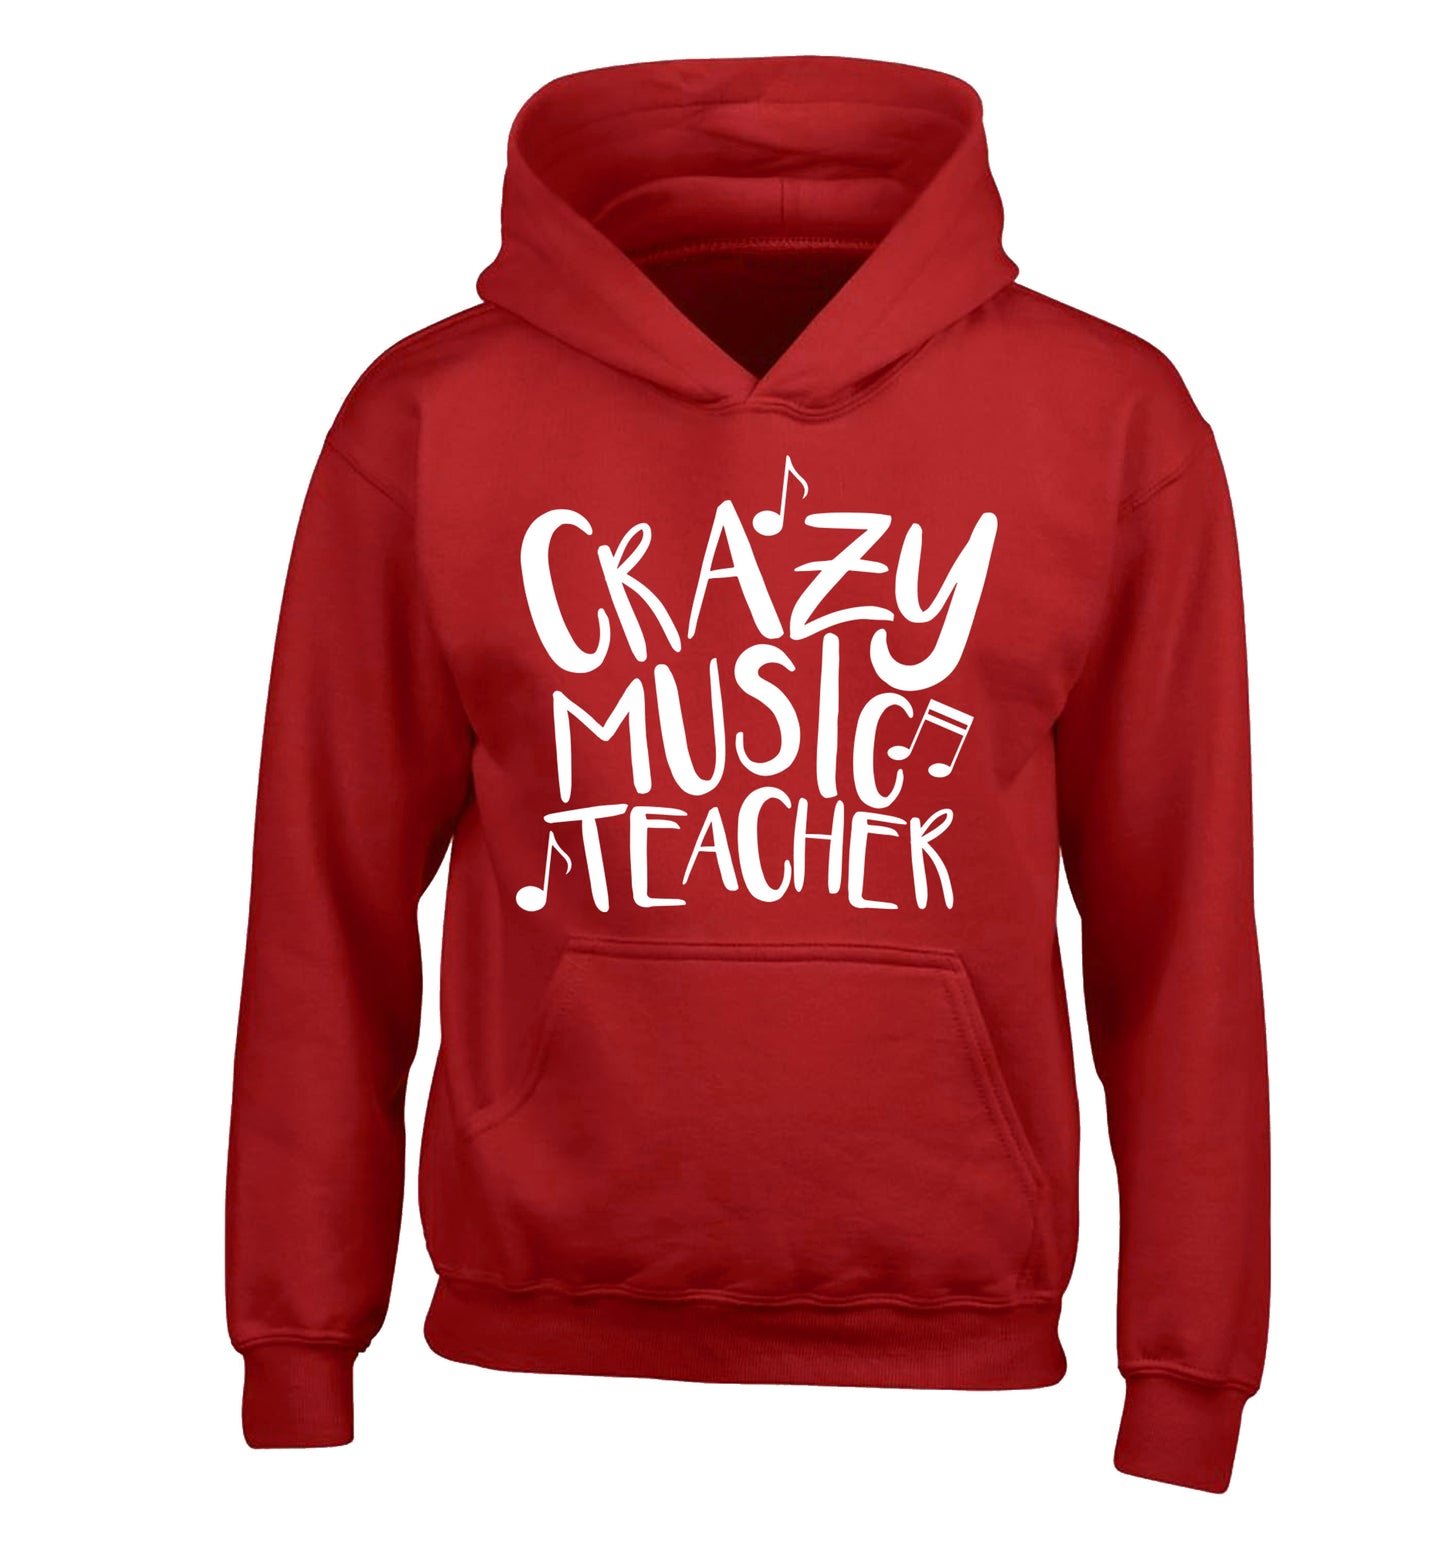 Crazy music teacher children's red hoodie 12-13 Years